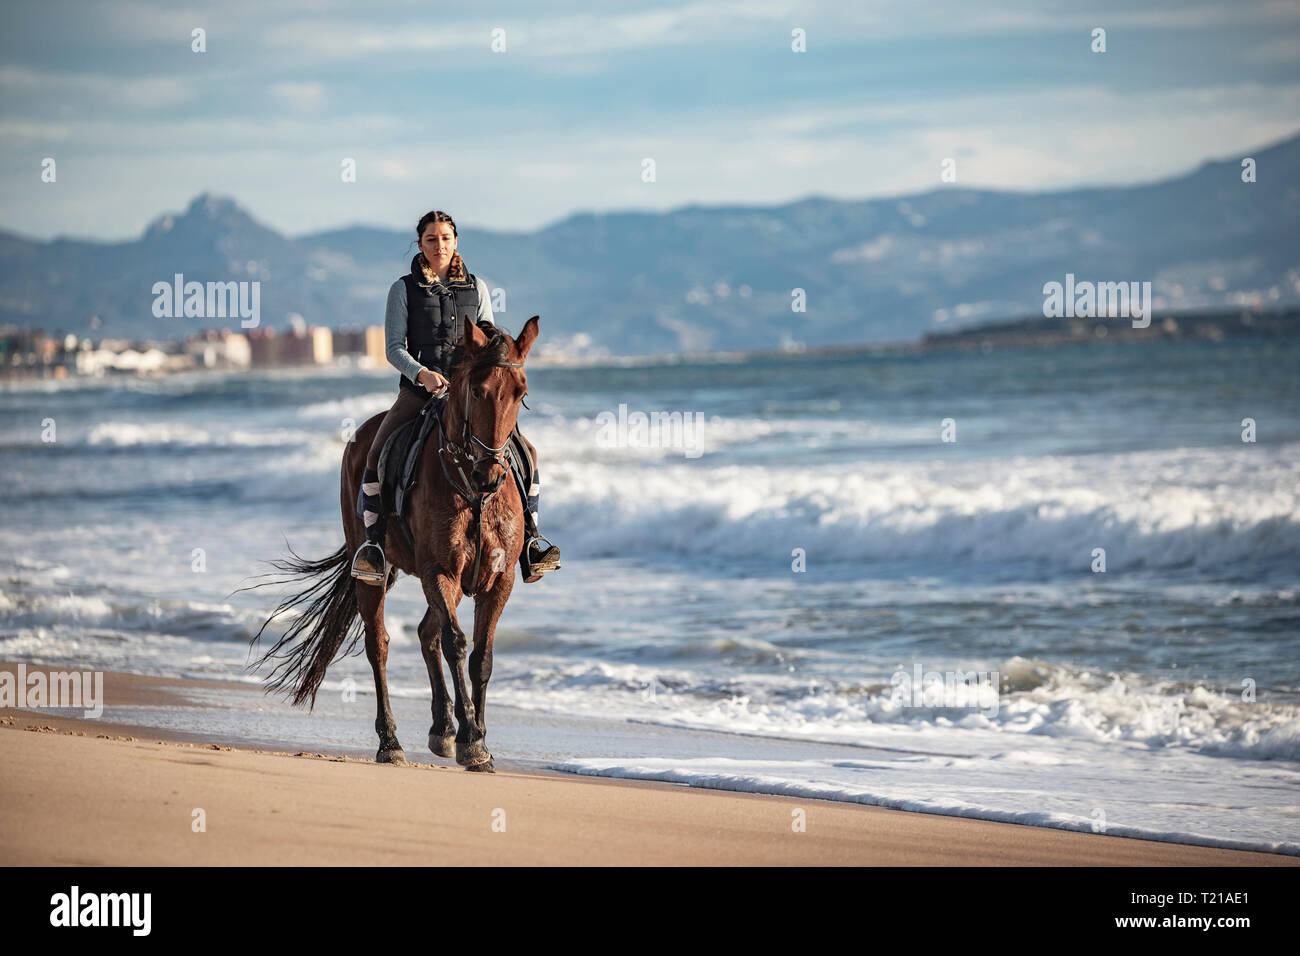 Spain, Tarifa, woman riding horse on the beach Stock Photo